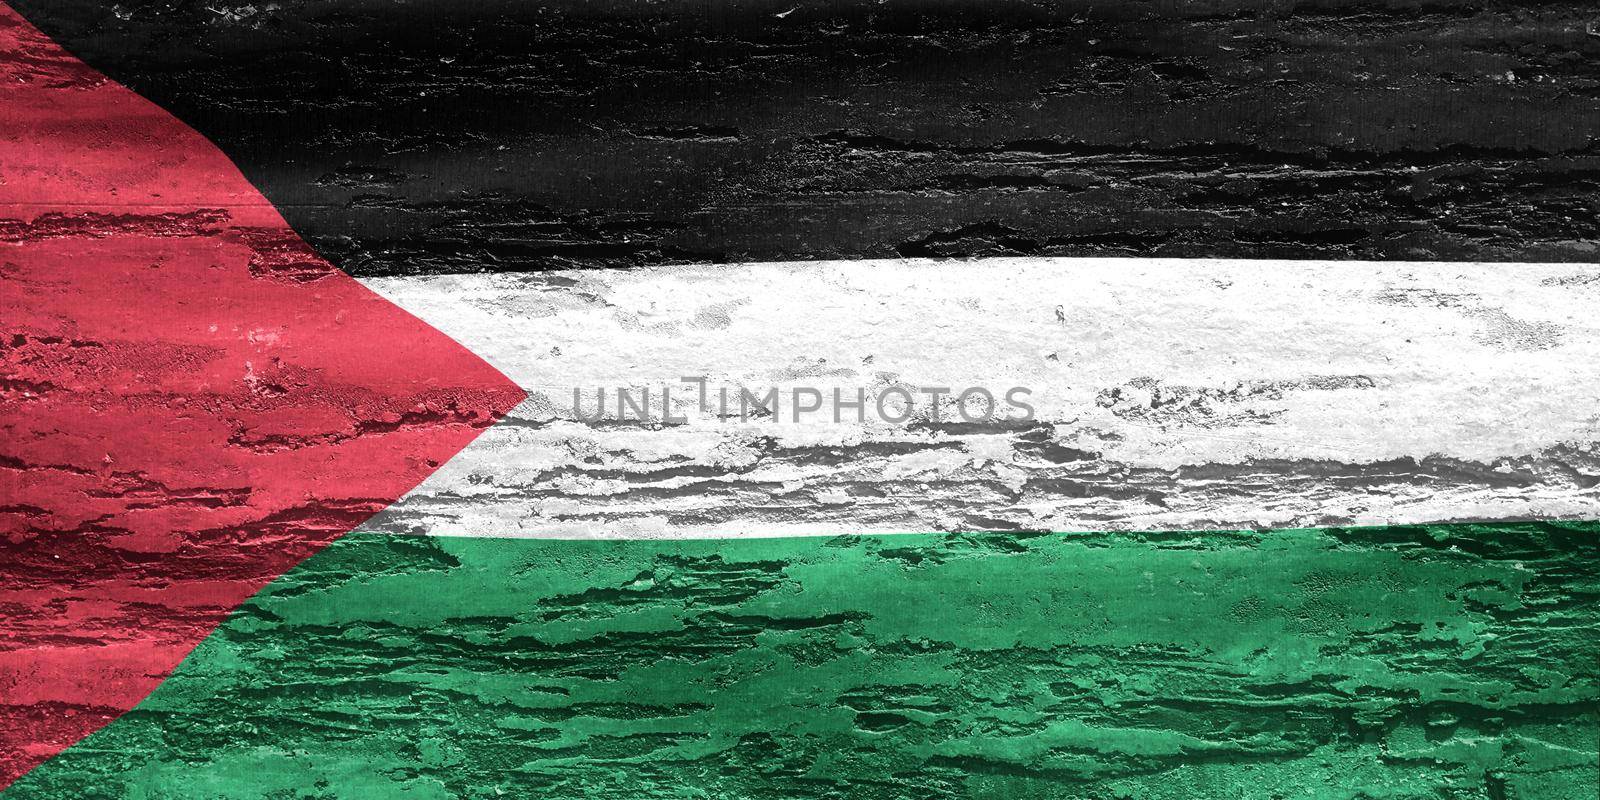 Palestine flag - realistic waving fabric flag